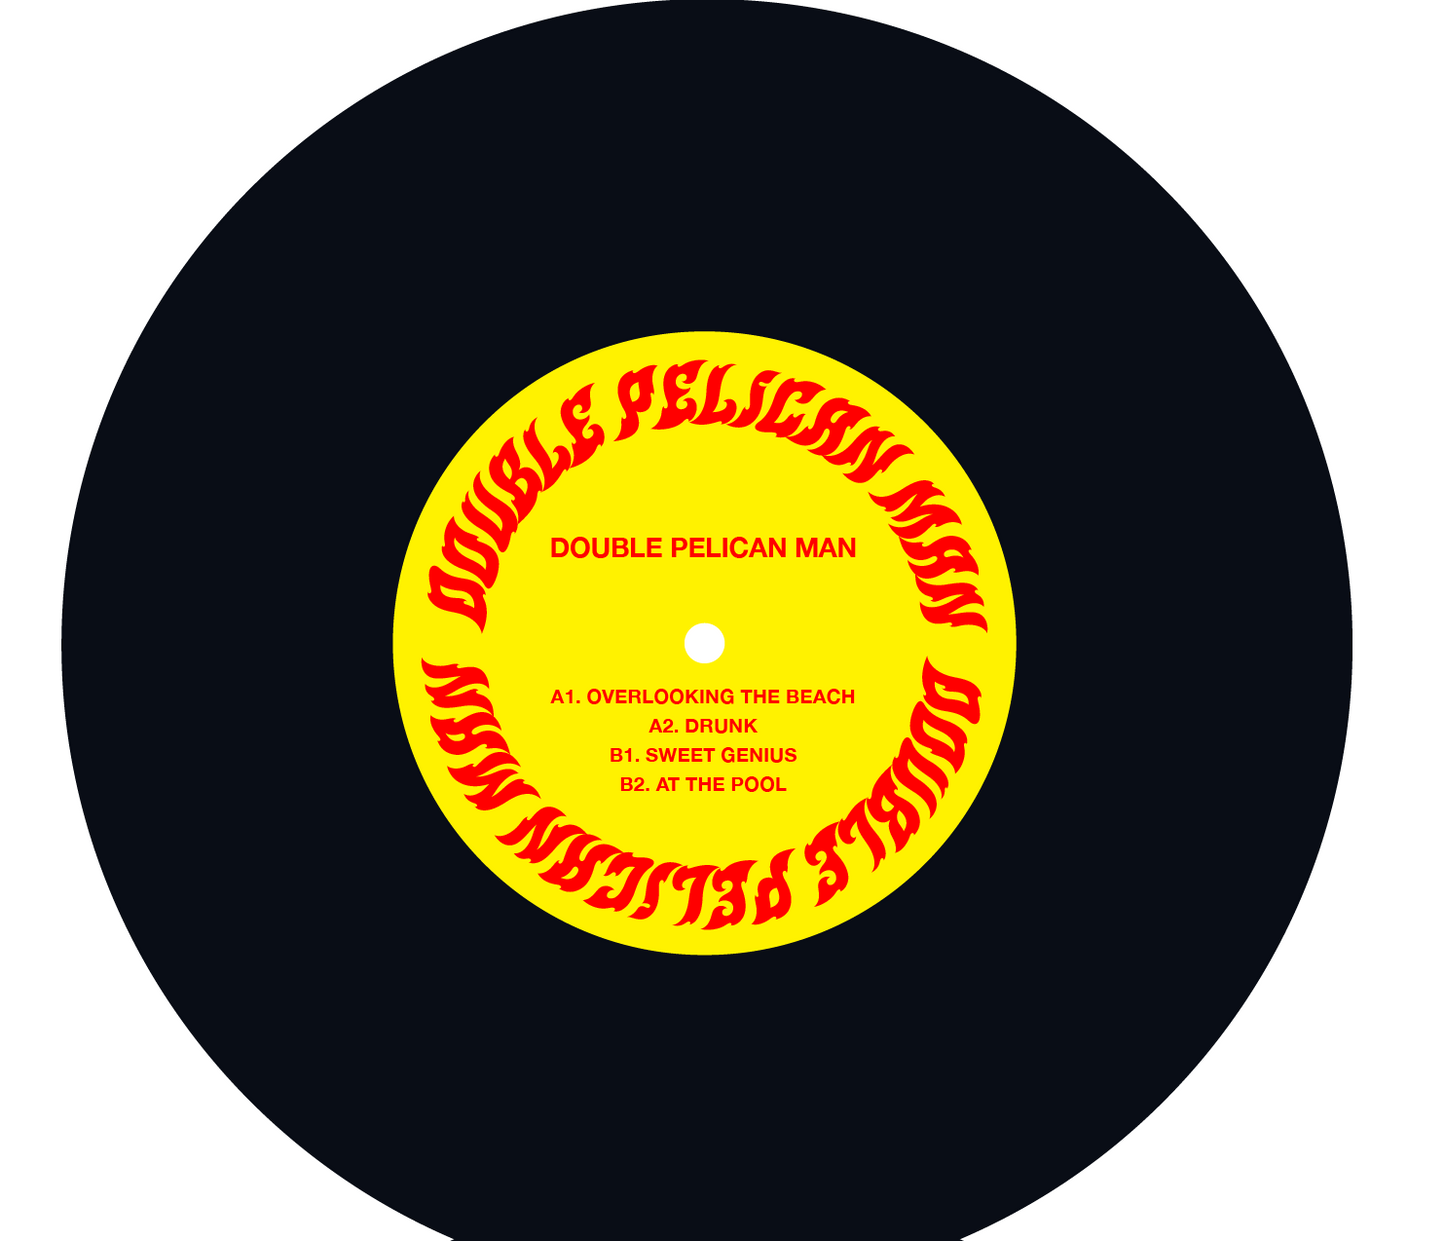 Double Pelican Man - The Nassau Sessions 7” vinyl